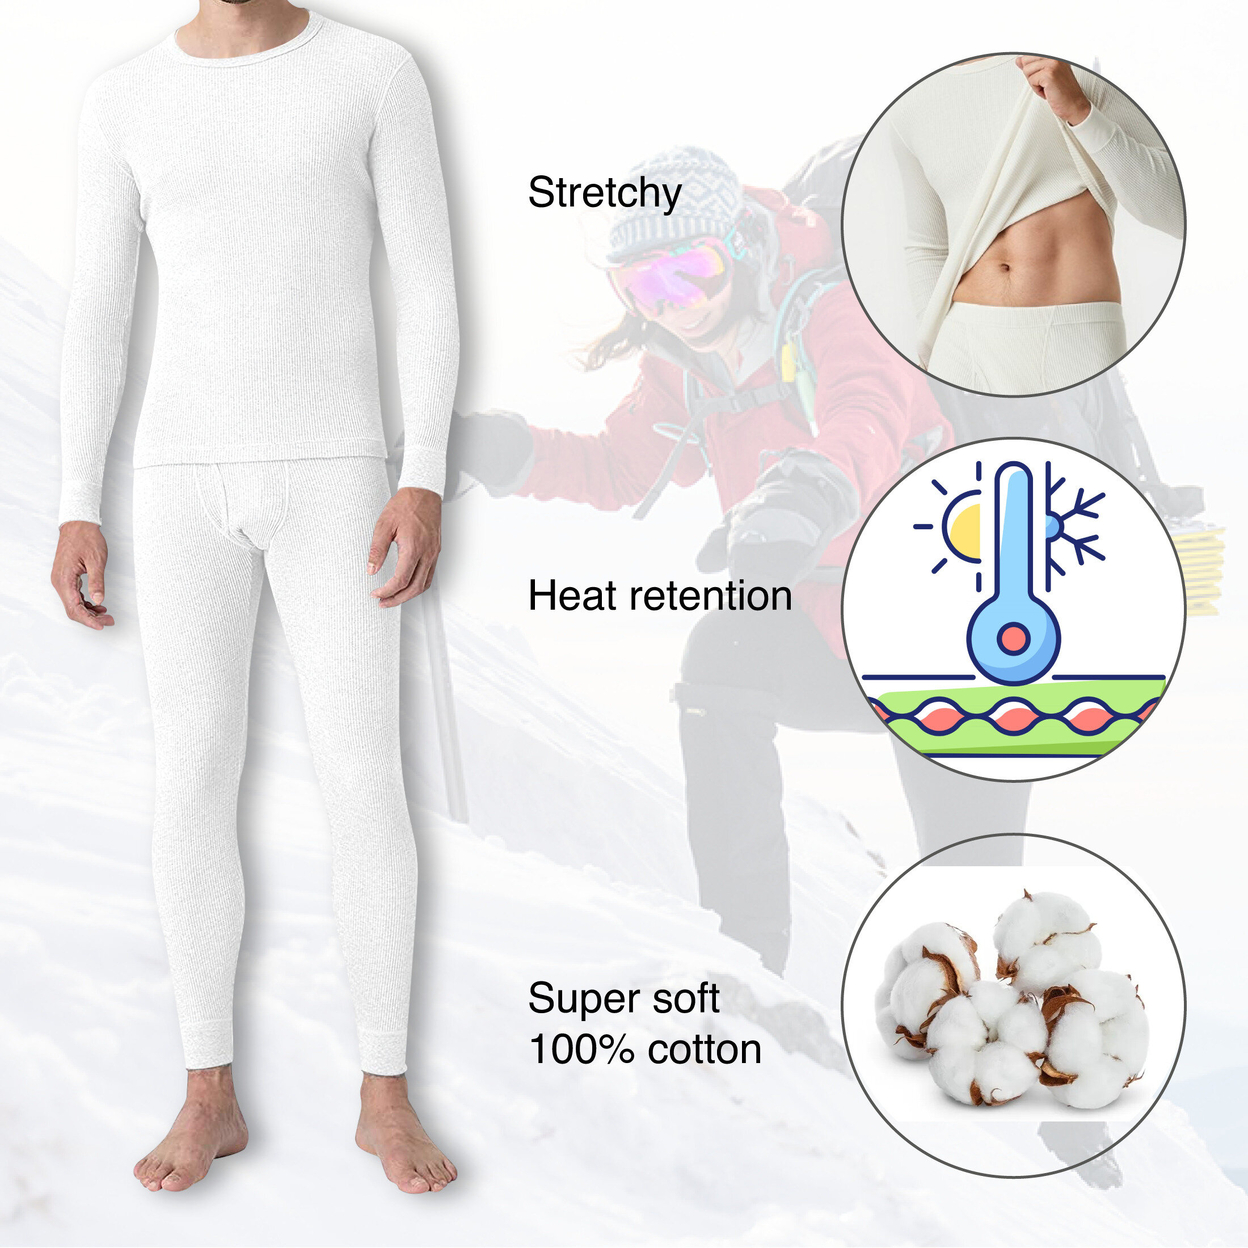 Multi-Set: Men's Super-Soft Cotton Waffle Knit Winter Thermal Underwear Set - 2-pack, Large